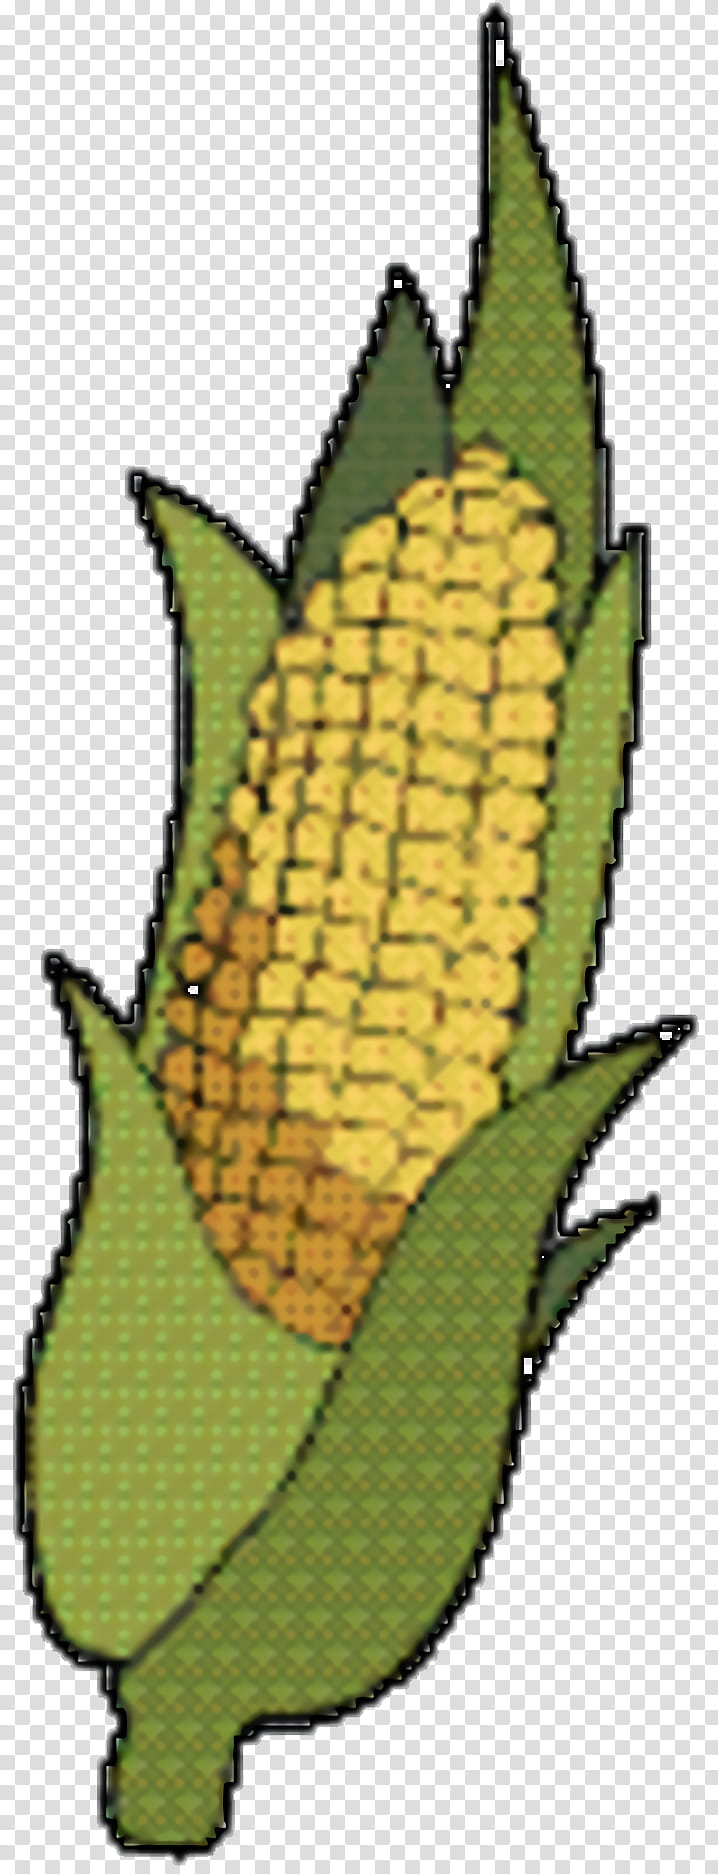 Corn, Commodity, Cartoon, Tree, Leaf, Fruit, Plants transparent background PNG clipart